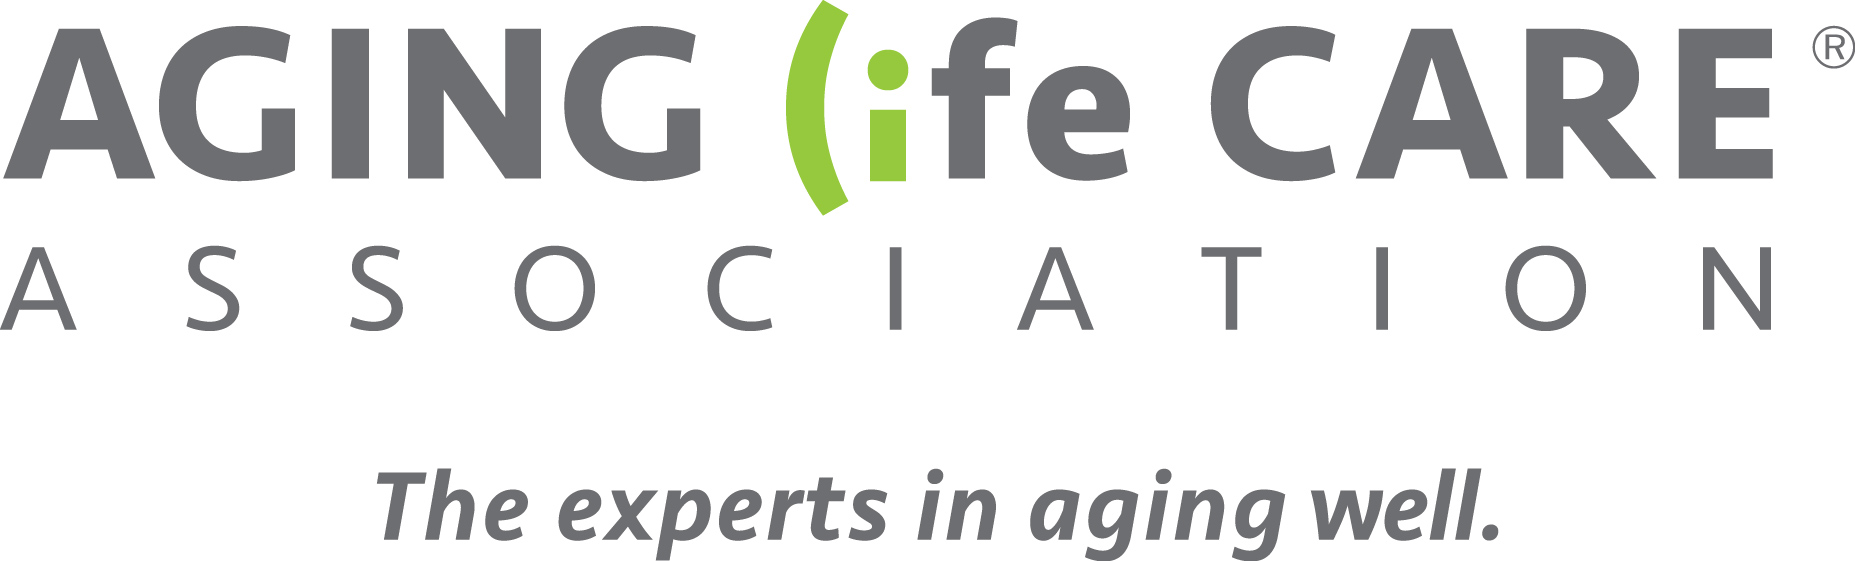 Aging Life Care Association